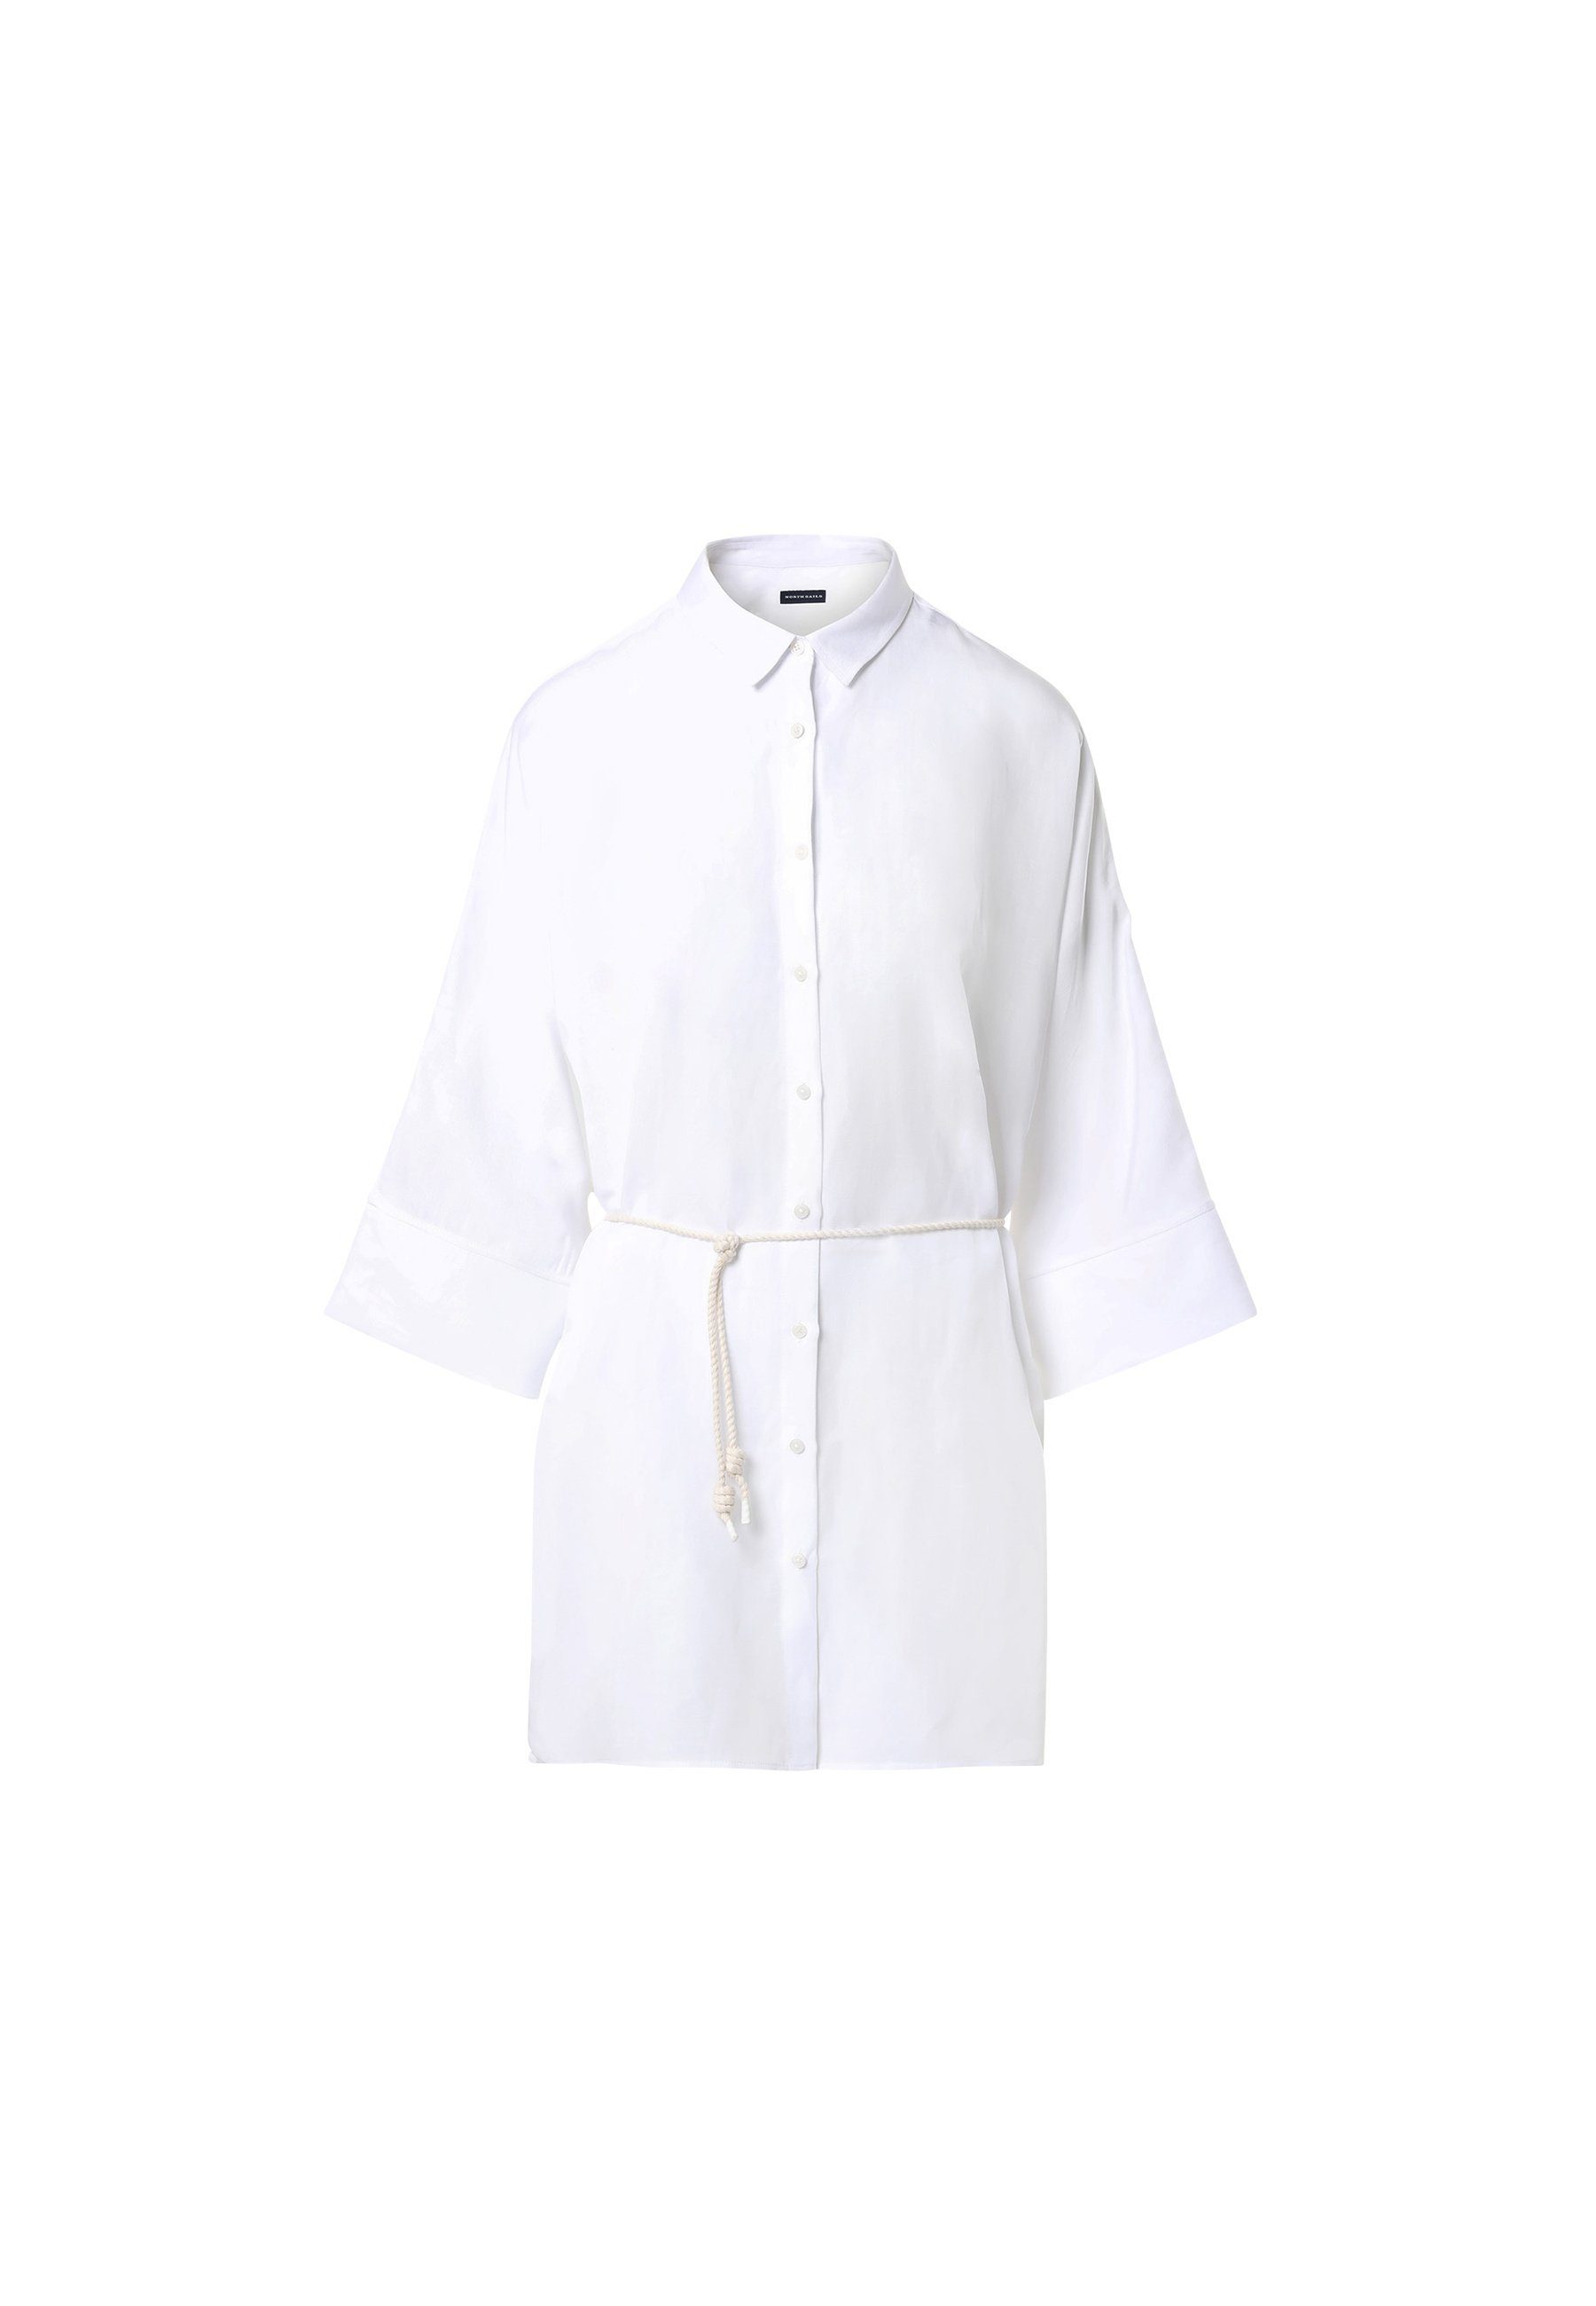 klassischem White North Shirtkleid Sails Design mit Kimono-Hemdblusenkleid